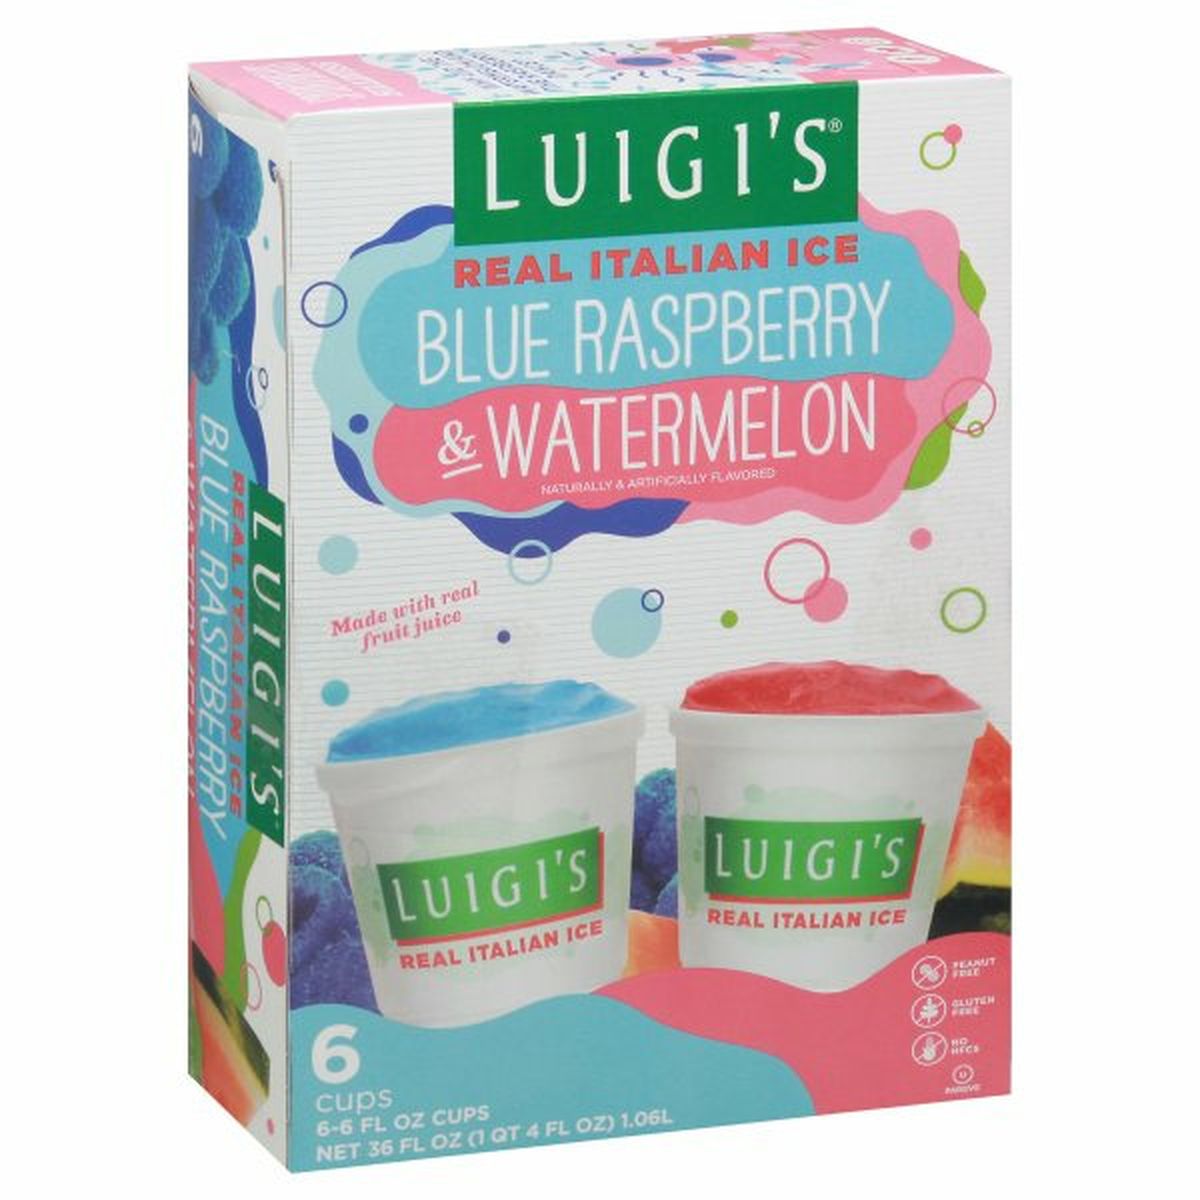 Calories in Luigi's Italian Ice, Blue Raspberry & Watermelon, Real